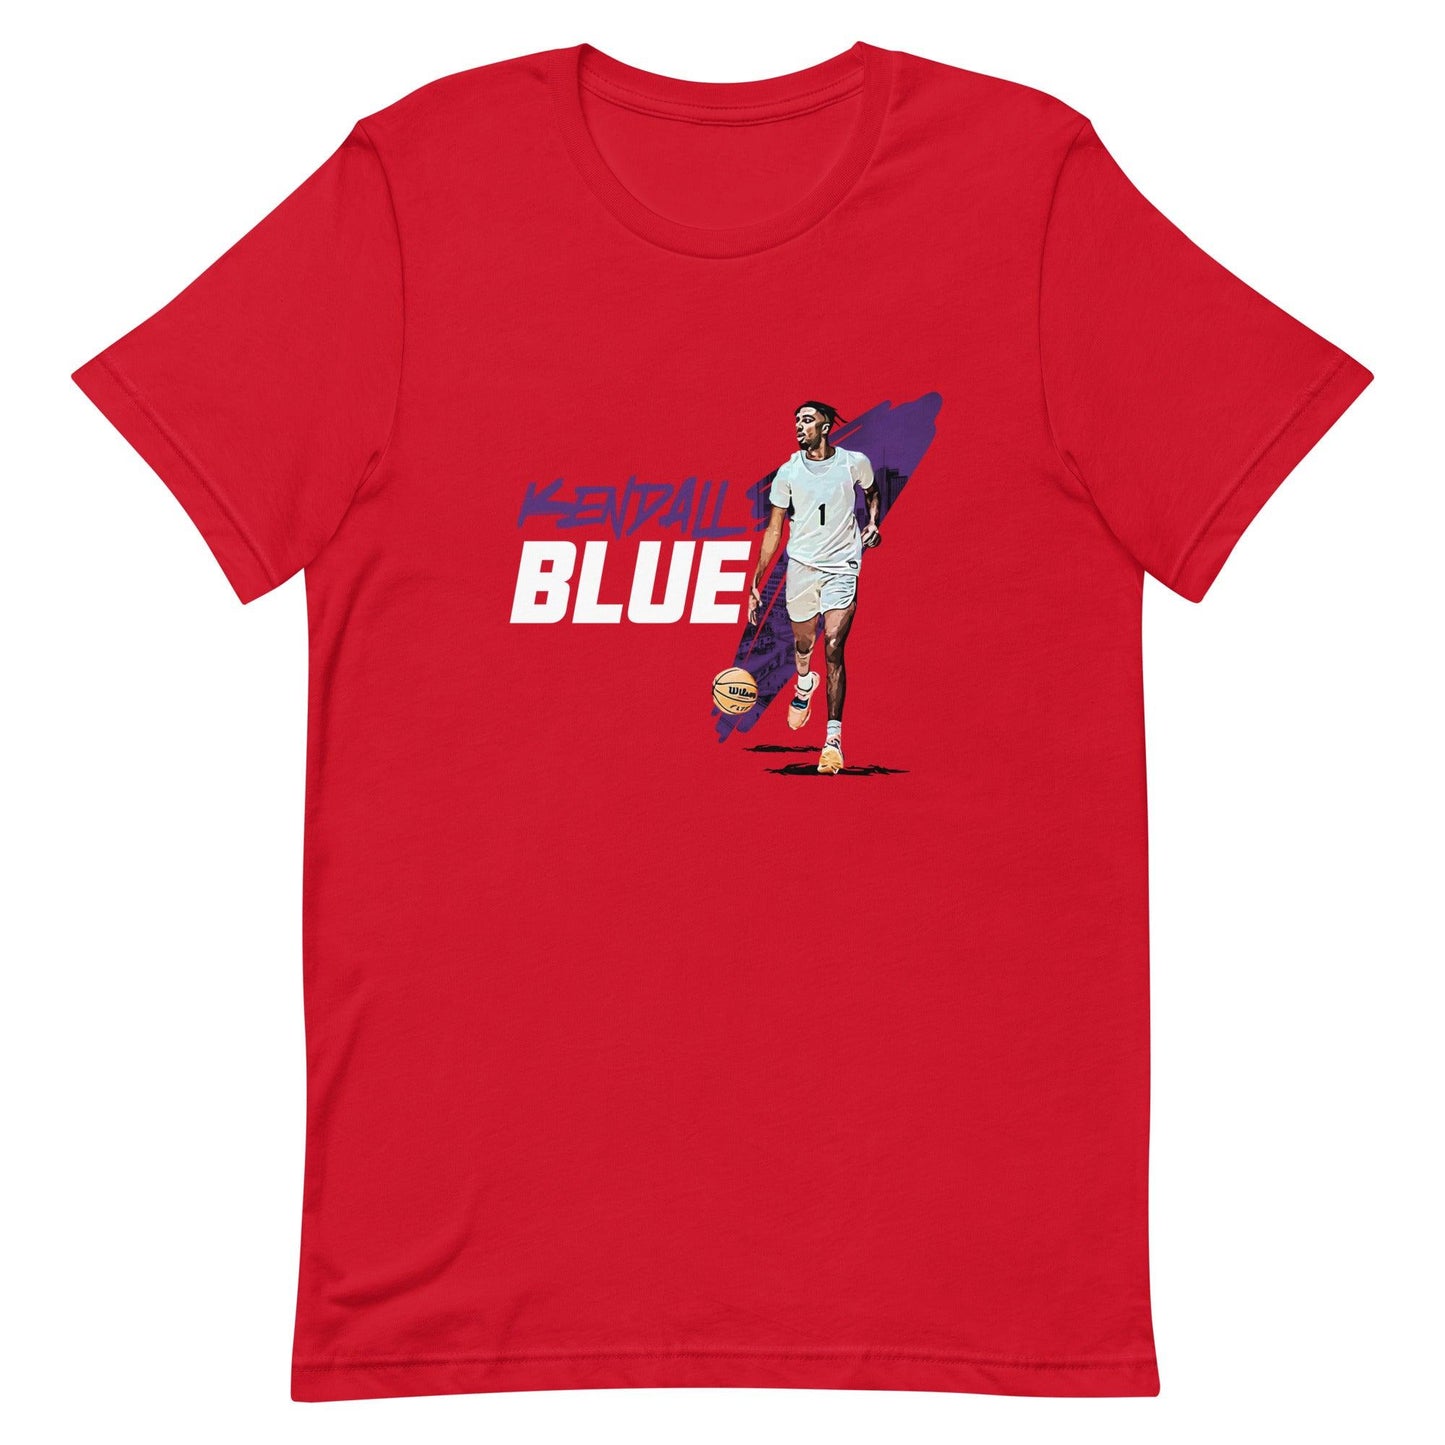 Kendall Blue "Gameday" t-shirt - Fan Arch